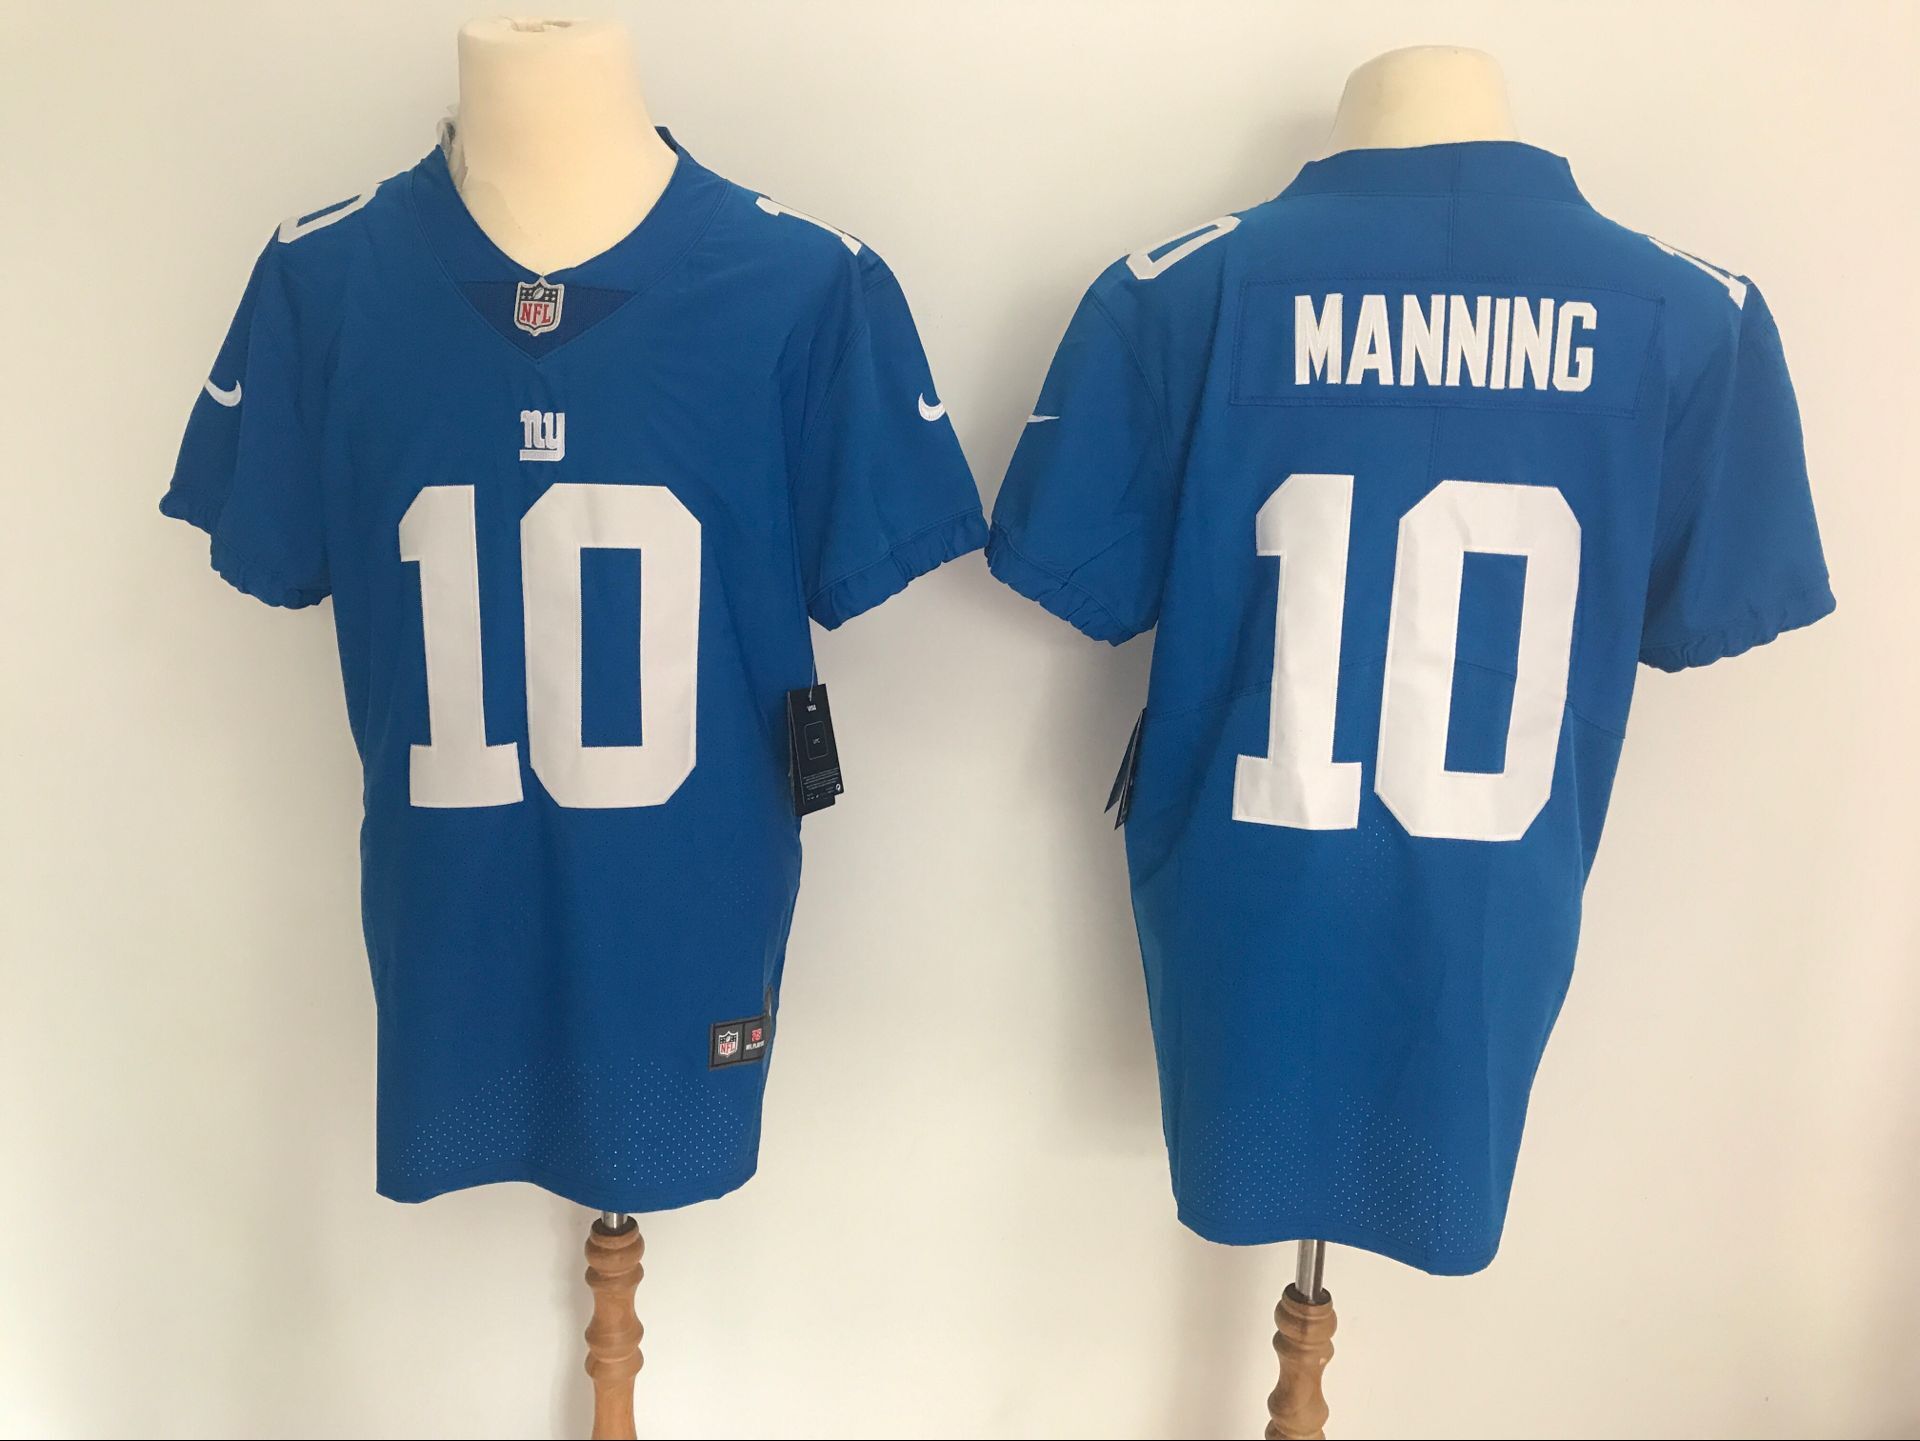 Men's New York Giants #10 Eli Manning Blue Vapor Untouchable Elite Stitched NFL Jersey